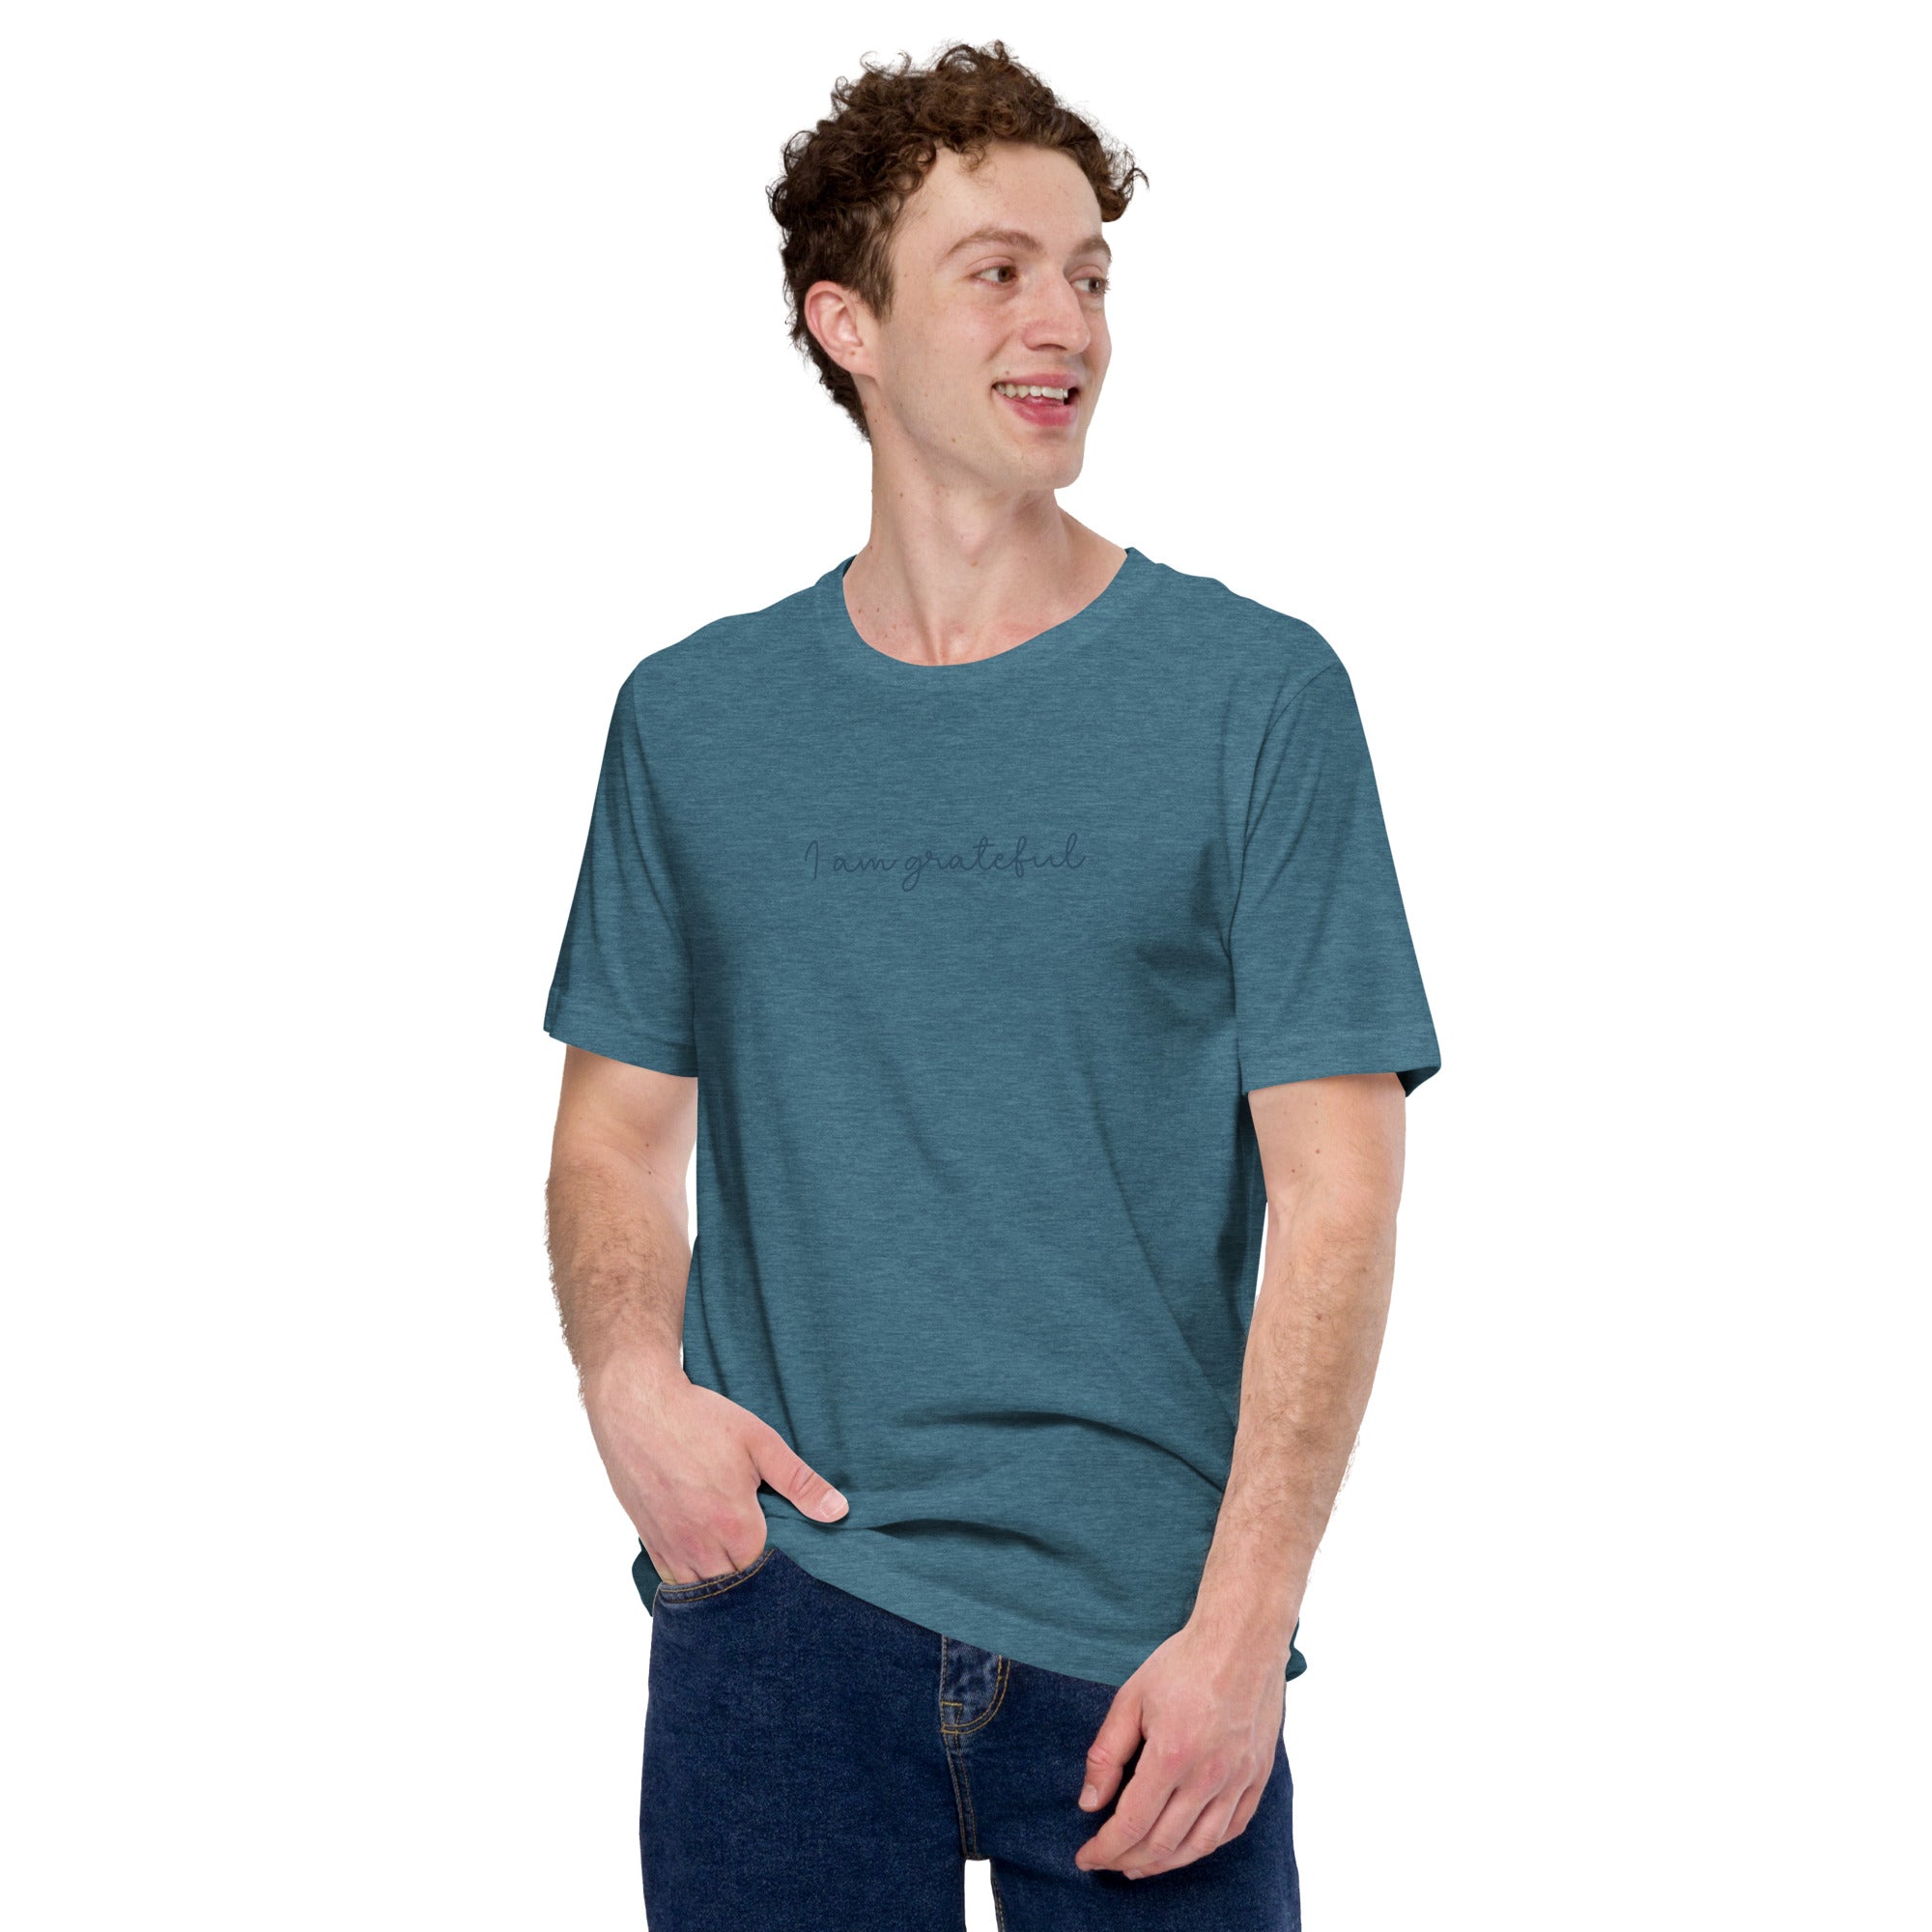 I Am Grateful, Premium Short-Sleeve Unisex T-Shirt | Positive Affirmation Tee